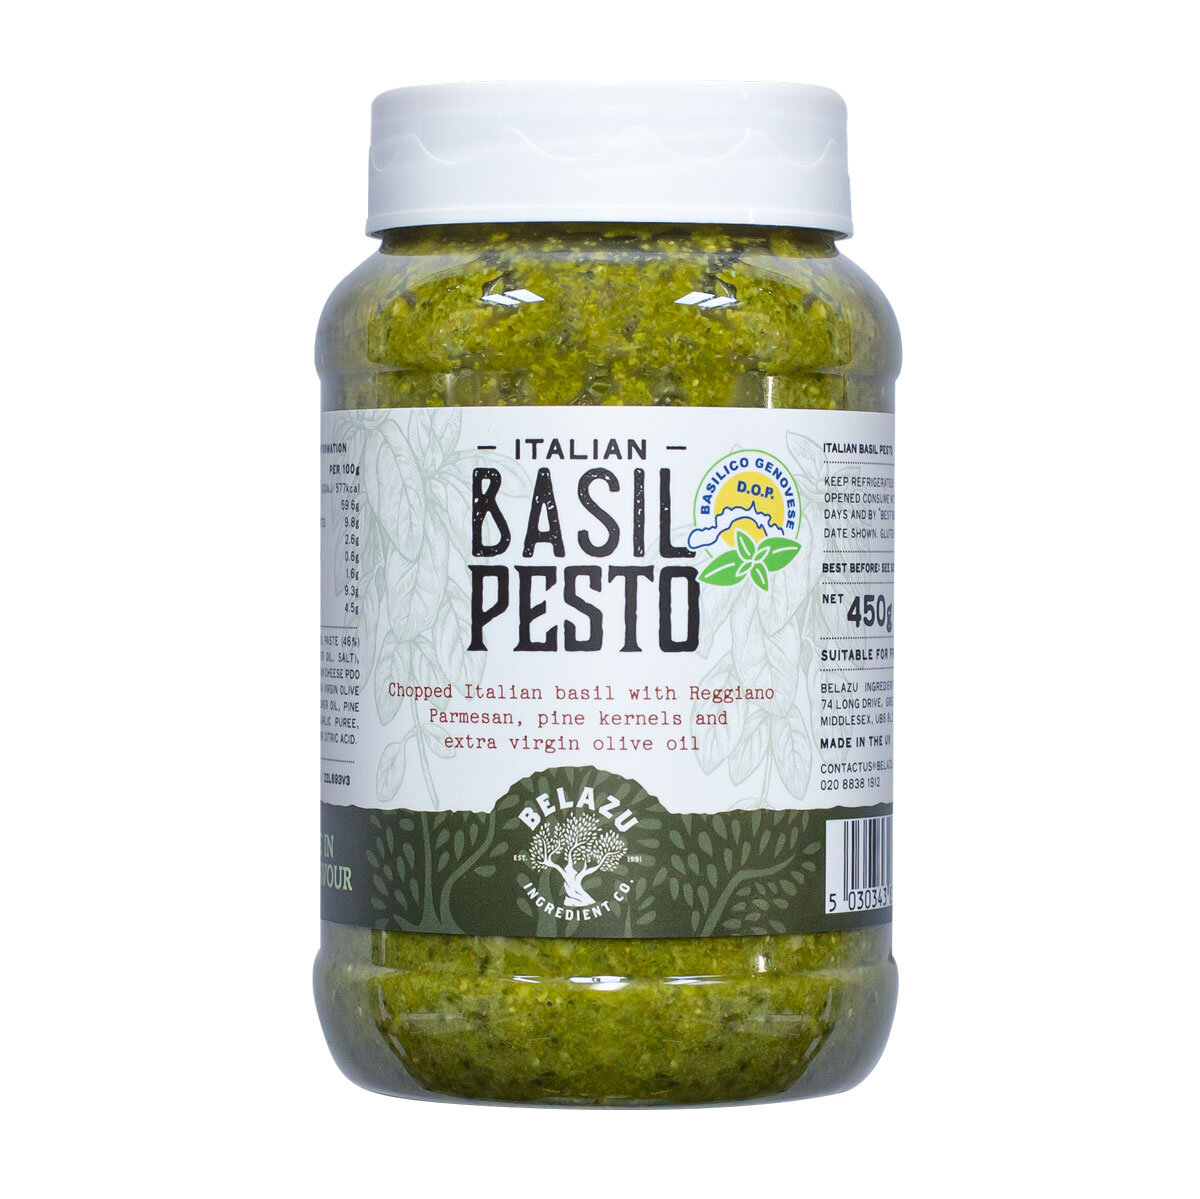 Pot of Belazu Italian Basil Pesto 450g